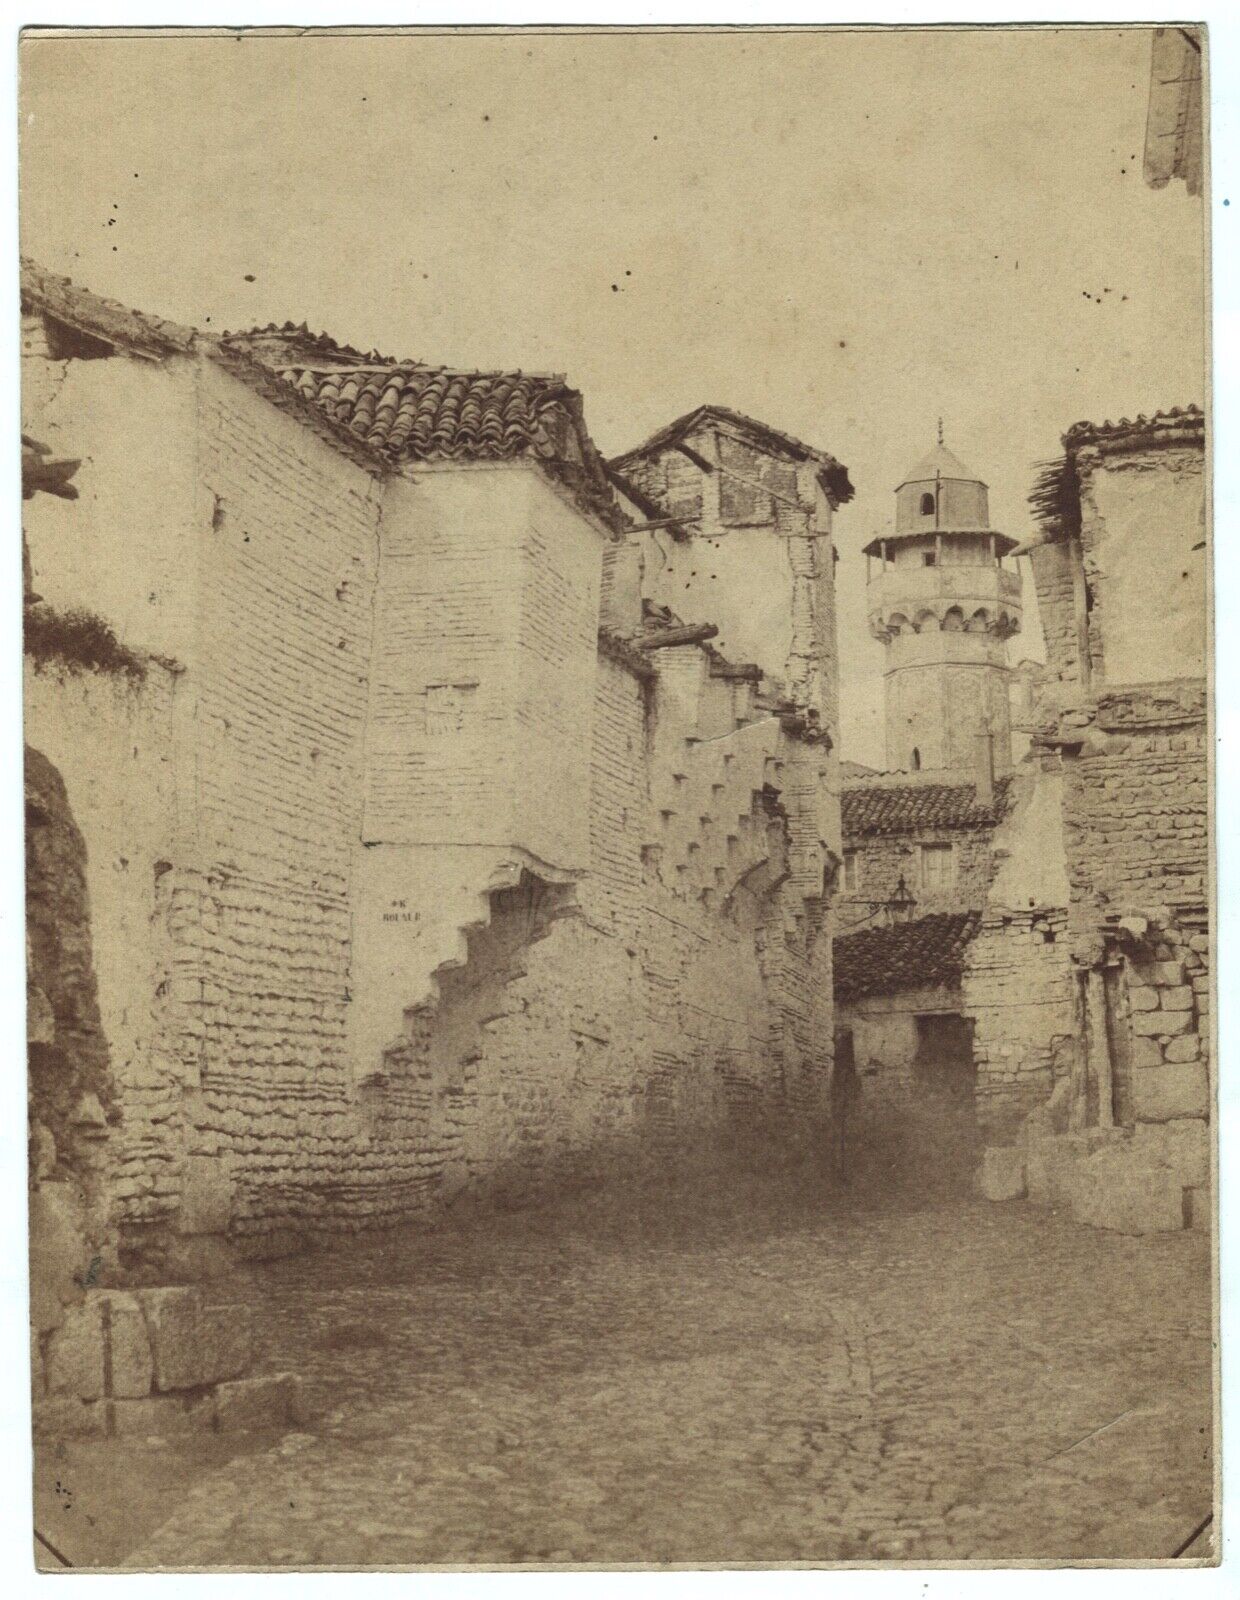 photo albumen salt print c.1865 Medina souk minaret mosque - Oran? Maghreb